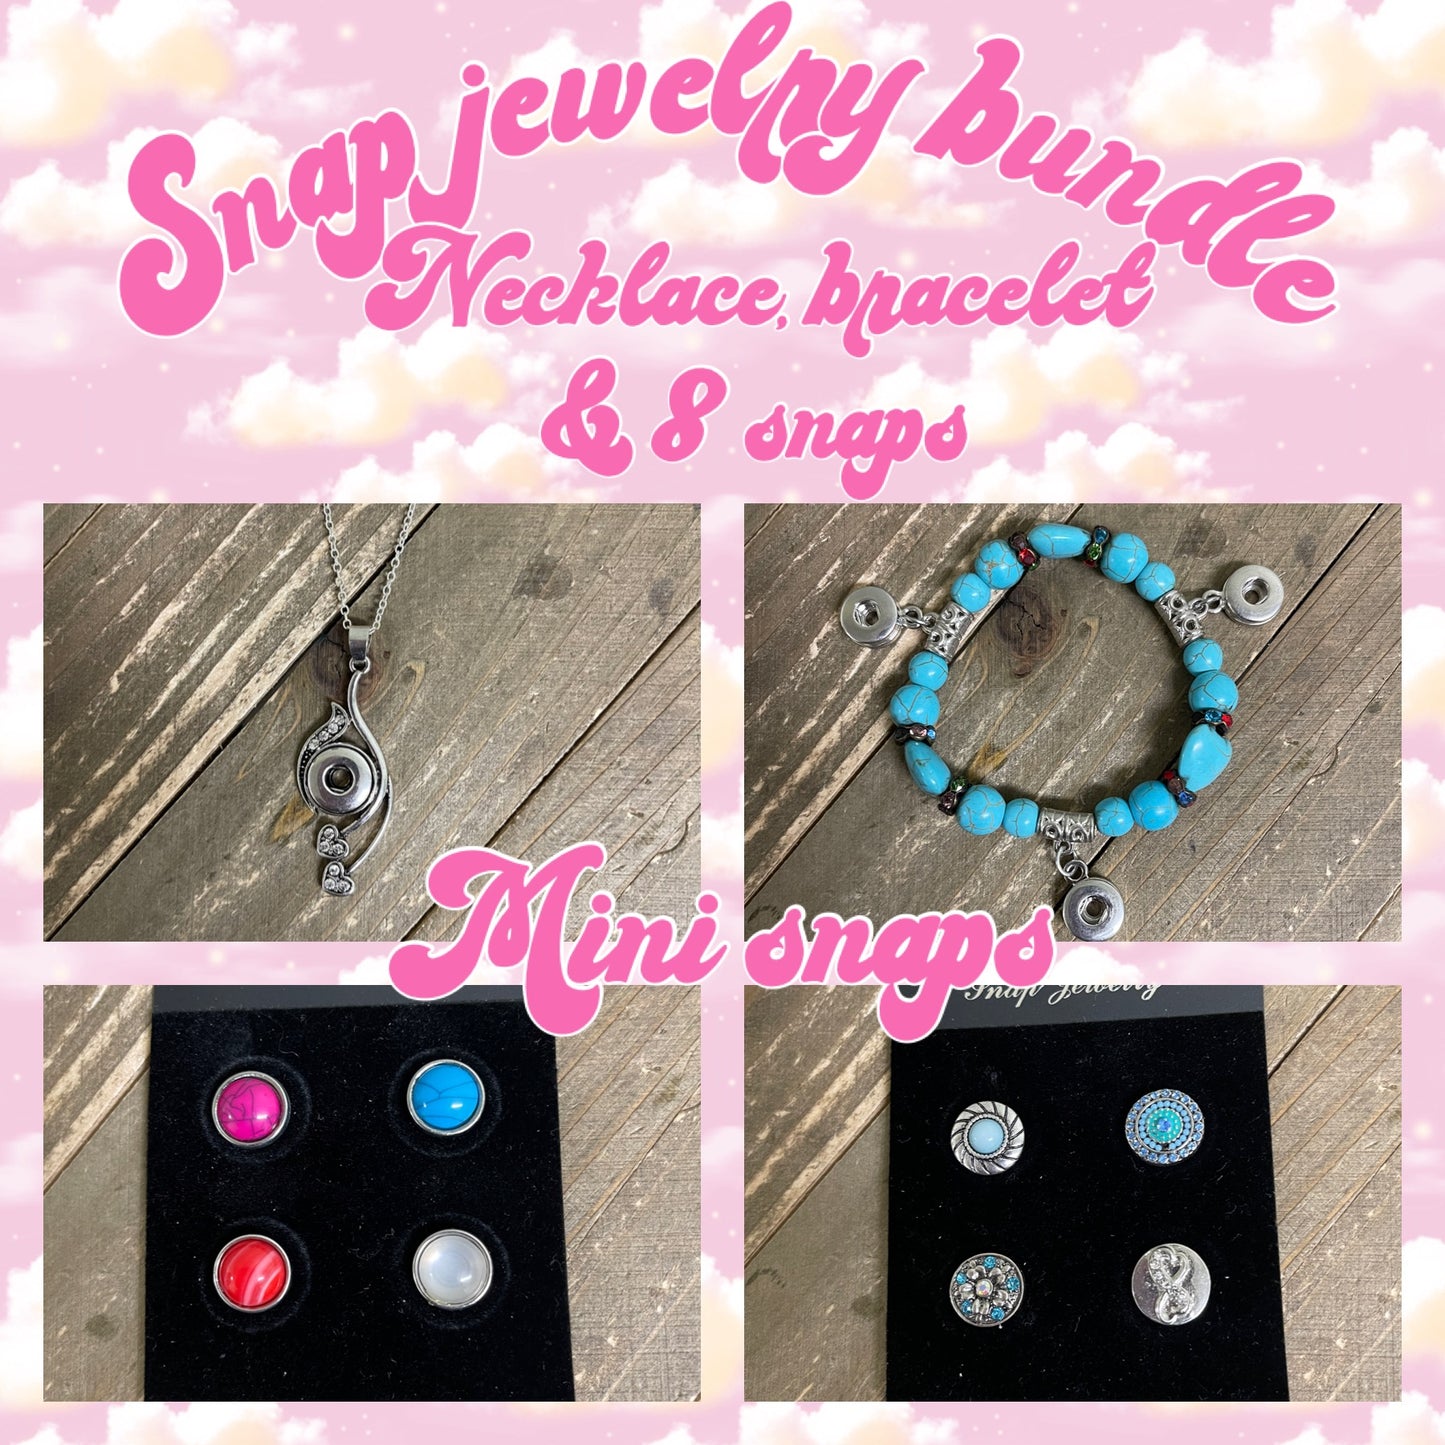 Mini Ginger Snap Bundle includes snap necklace, snap bracelet and 8 snaps